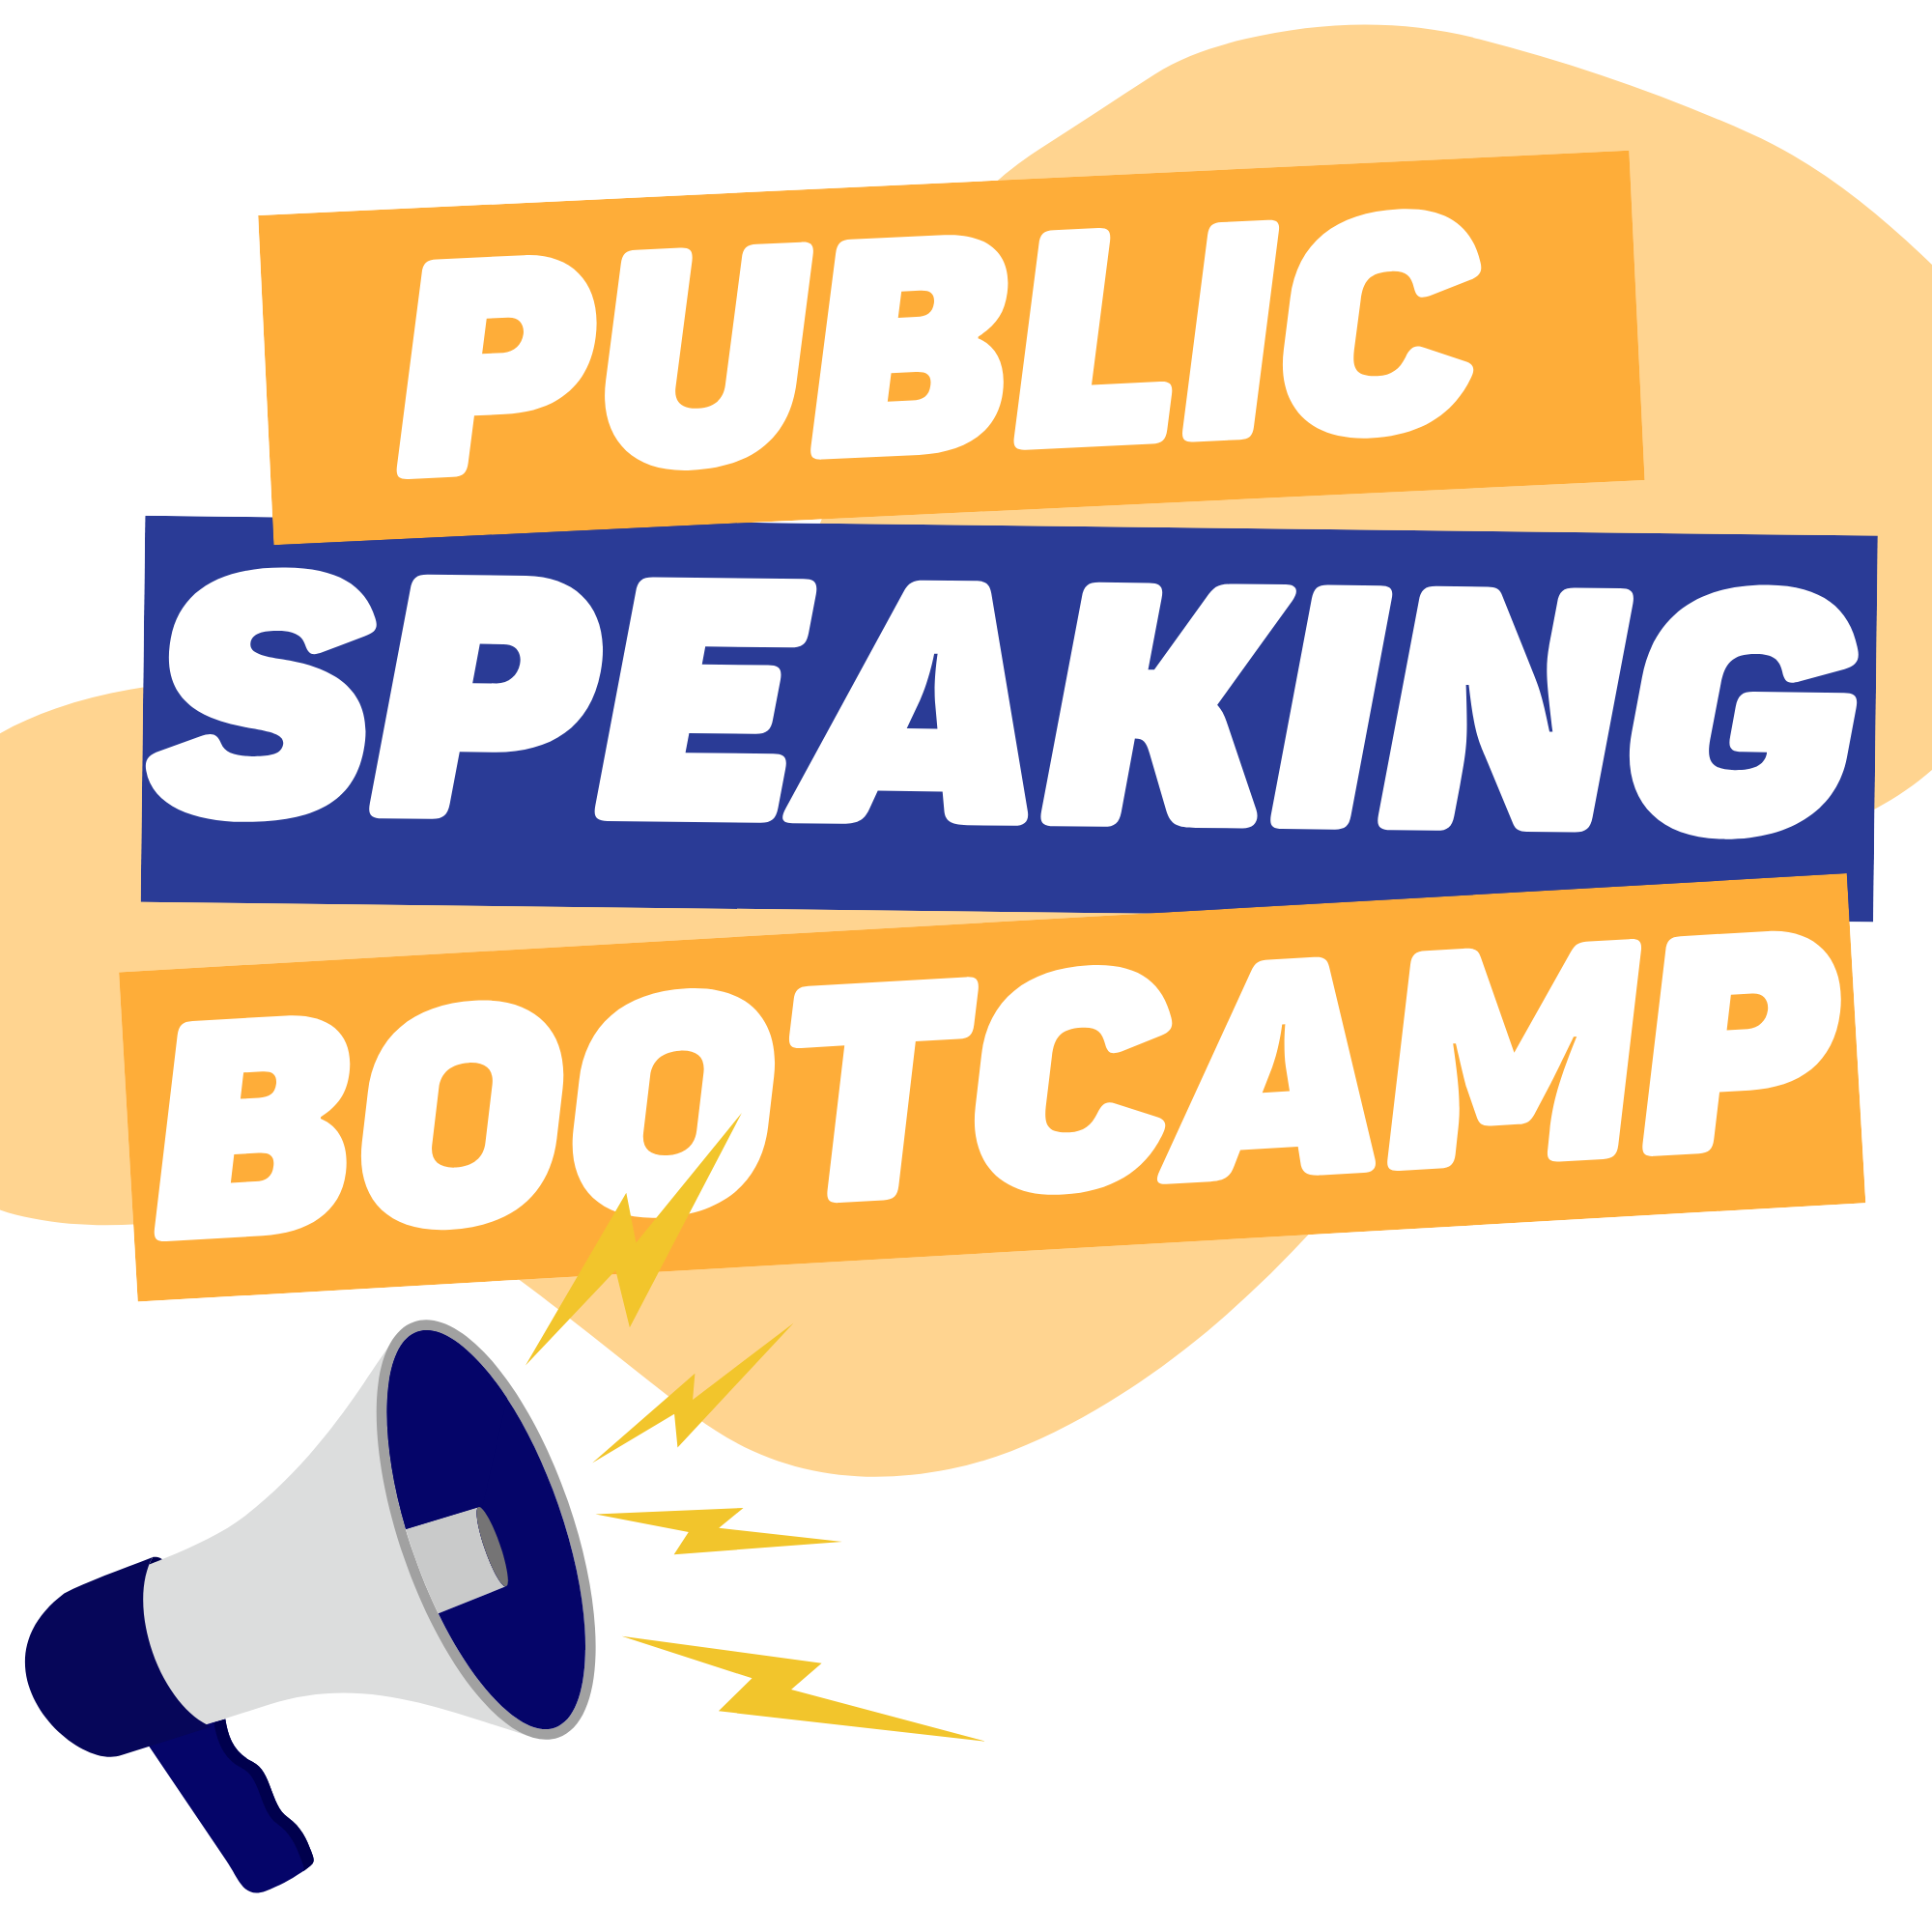 Public speaking bootcamp